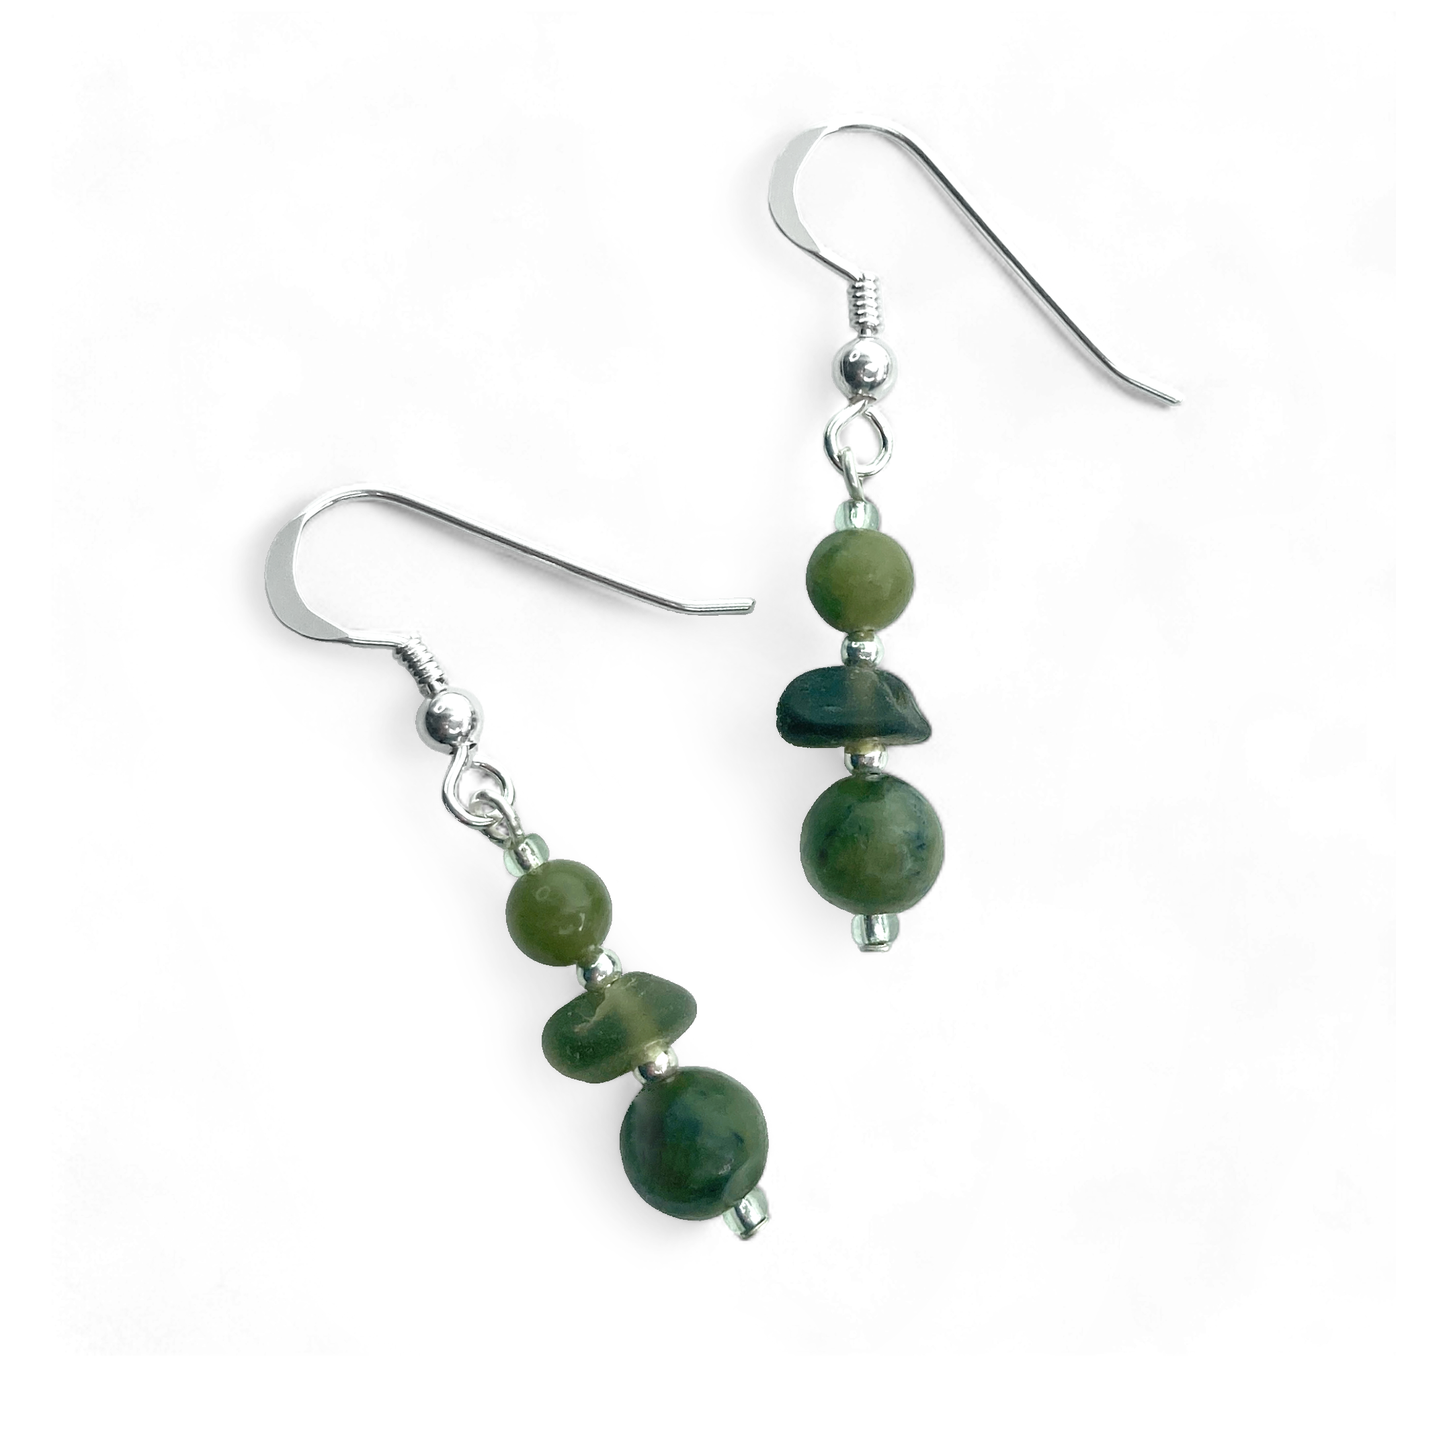 Green Sea Glass Earrings - Sterling Silver Beaded Earrings with Jade Crystal